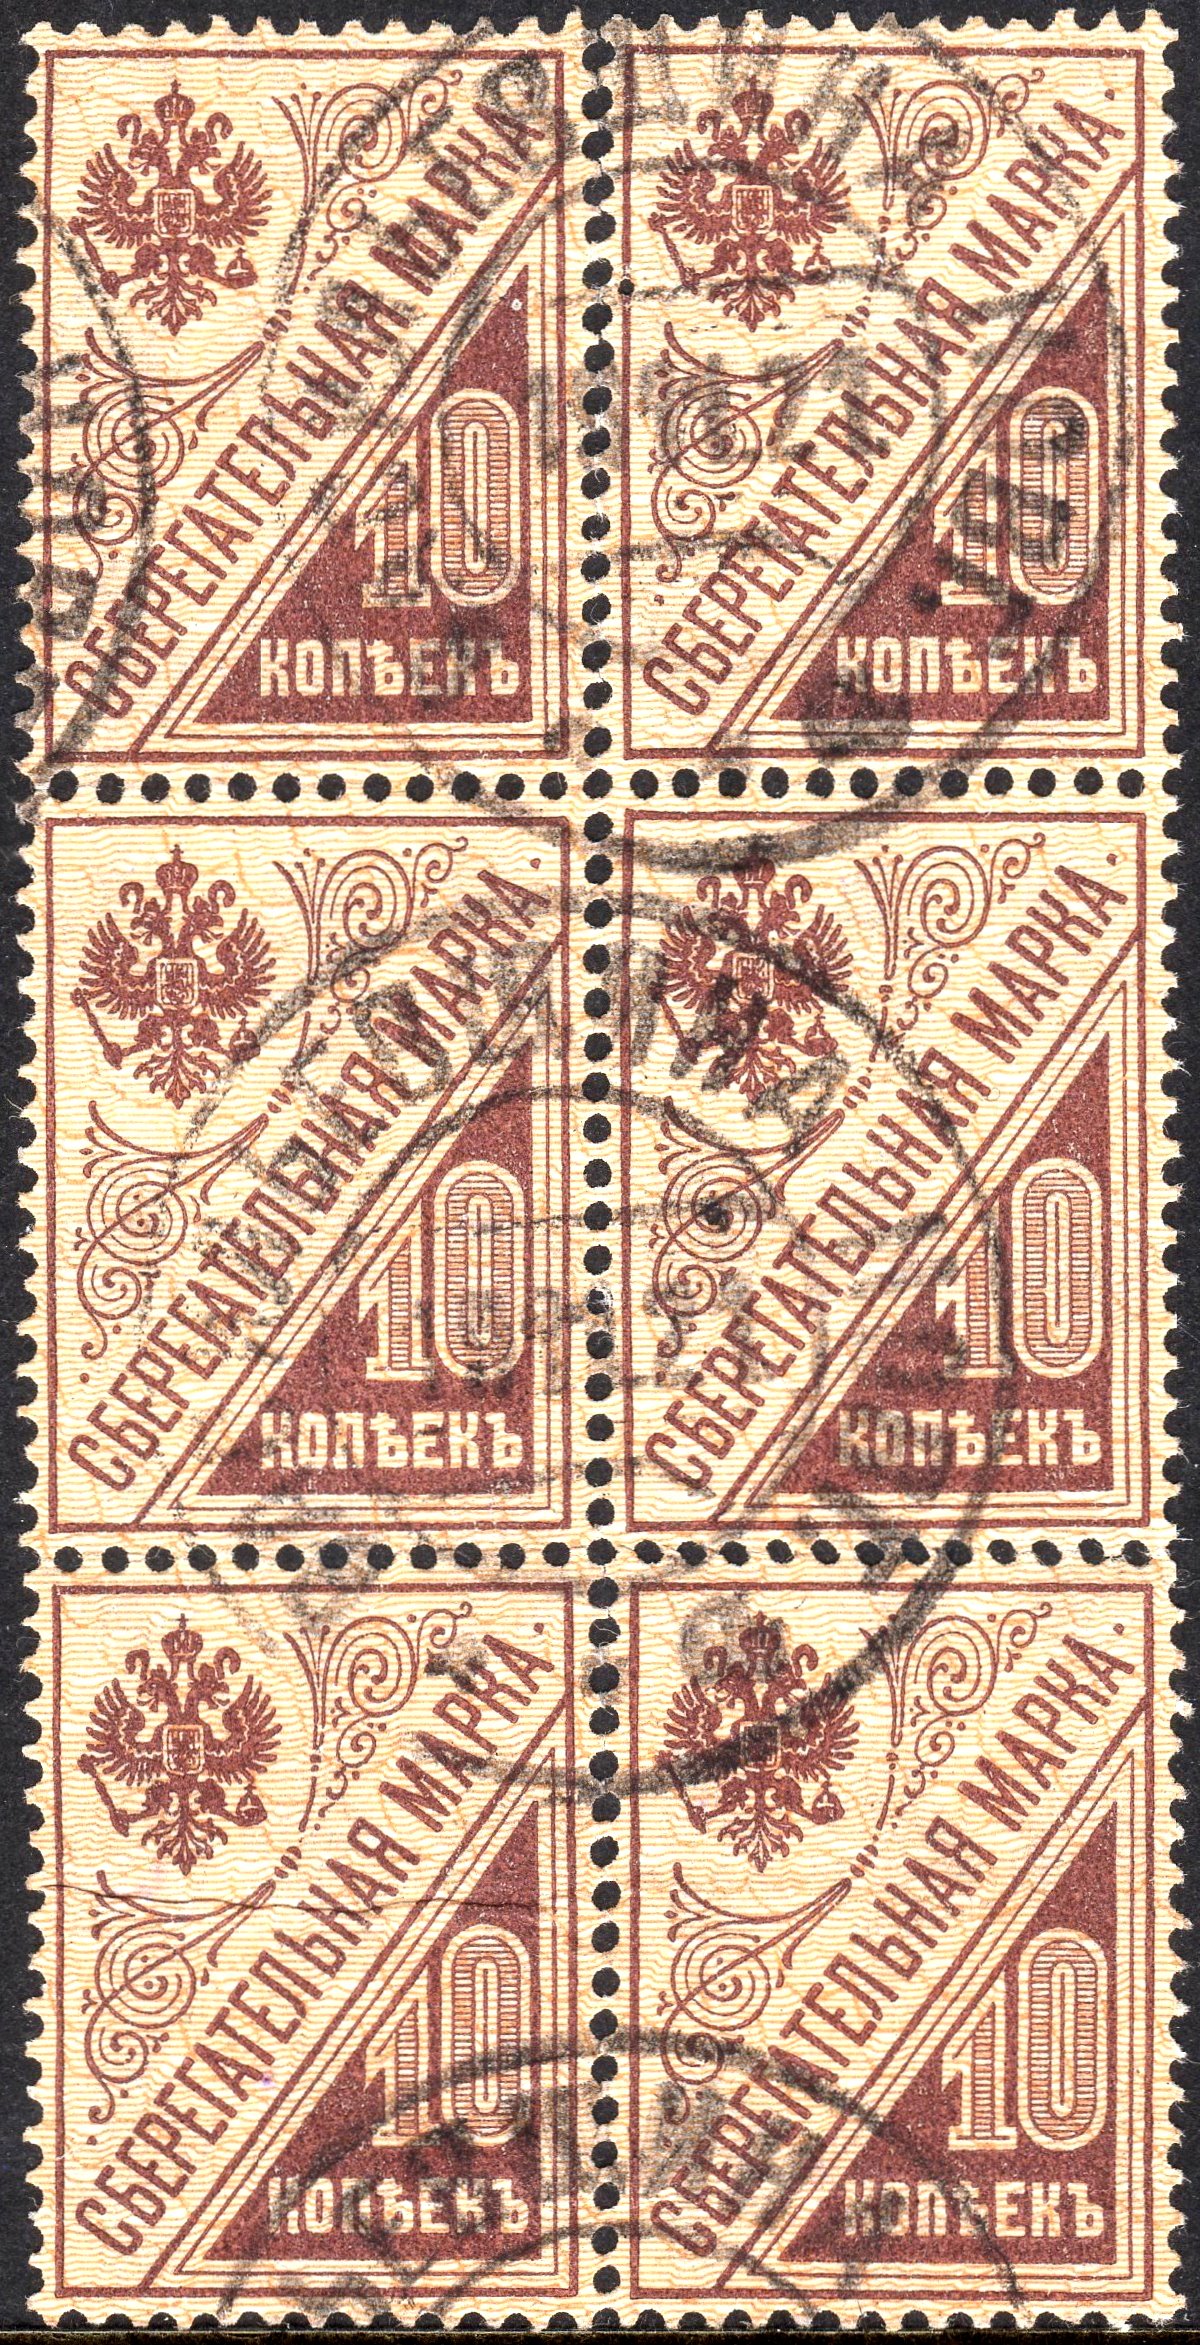 Russian postal savings stamps November 1921